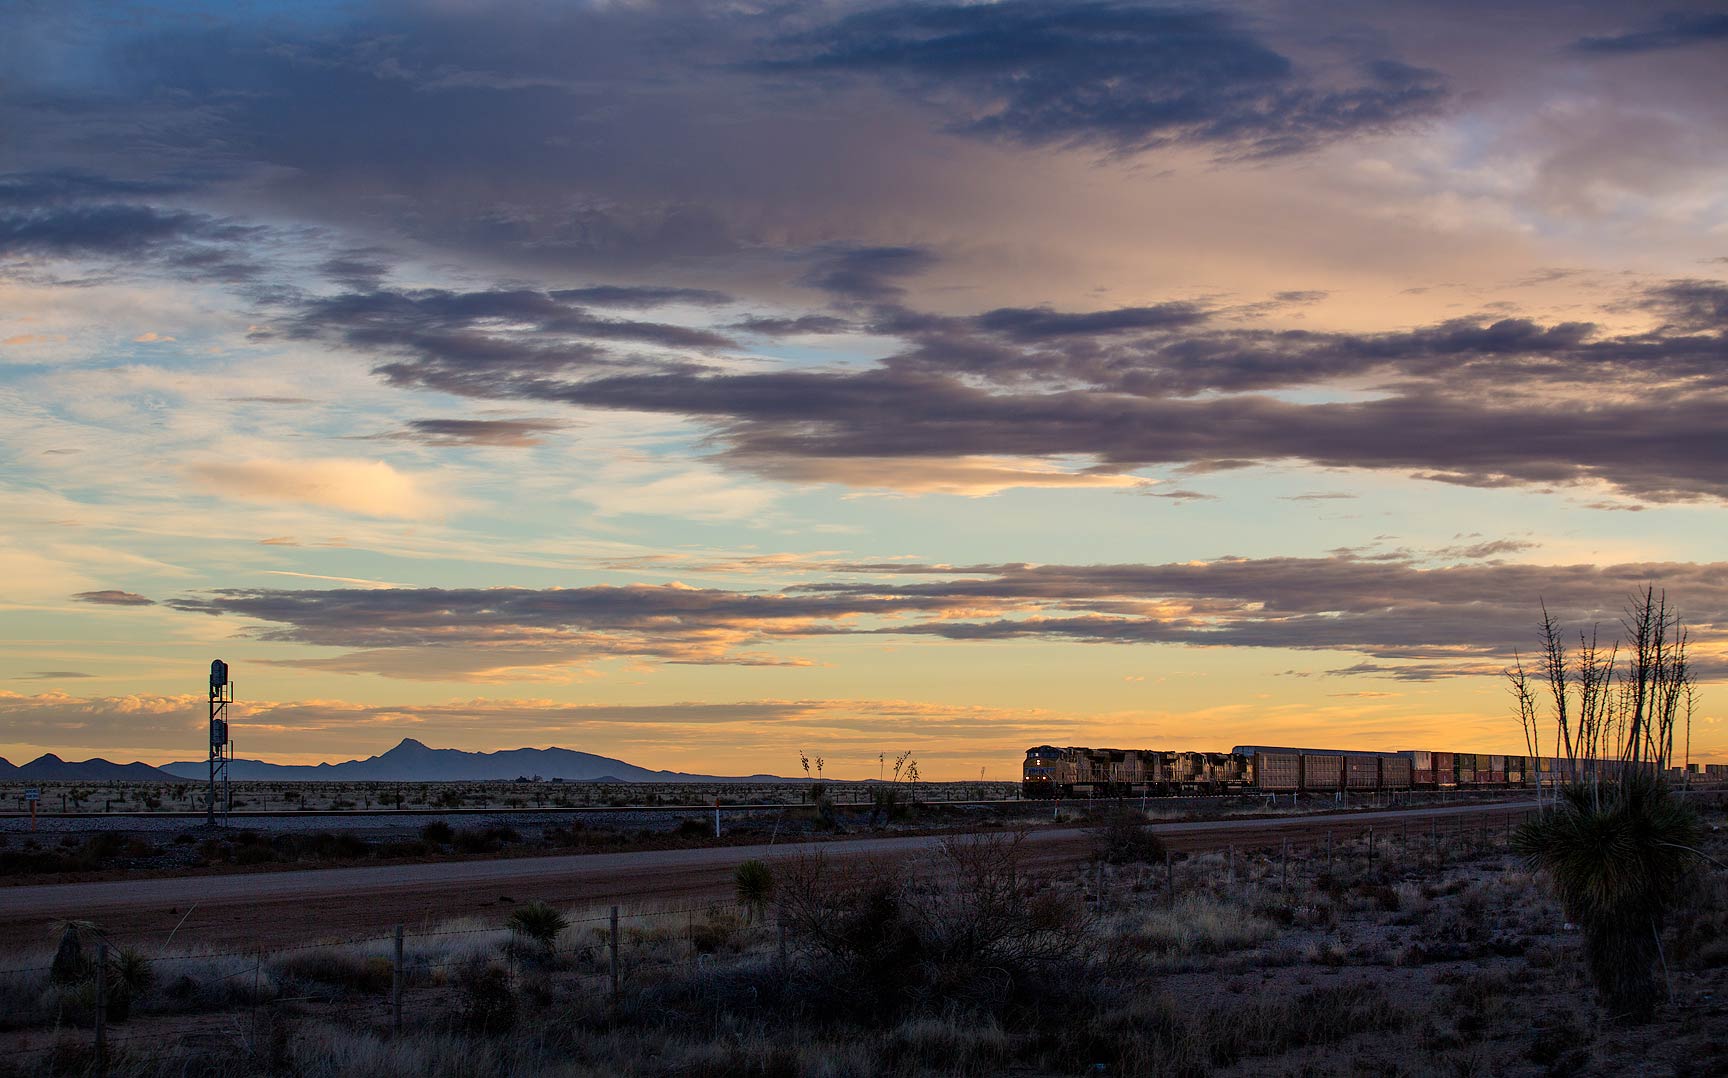 A train at sunrise, New Mexico.